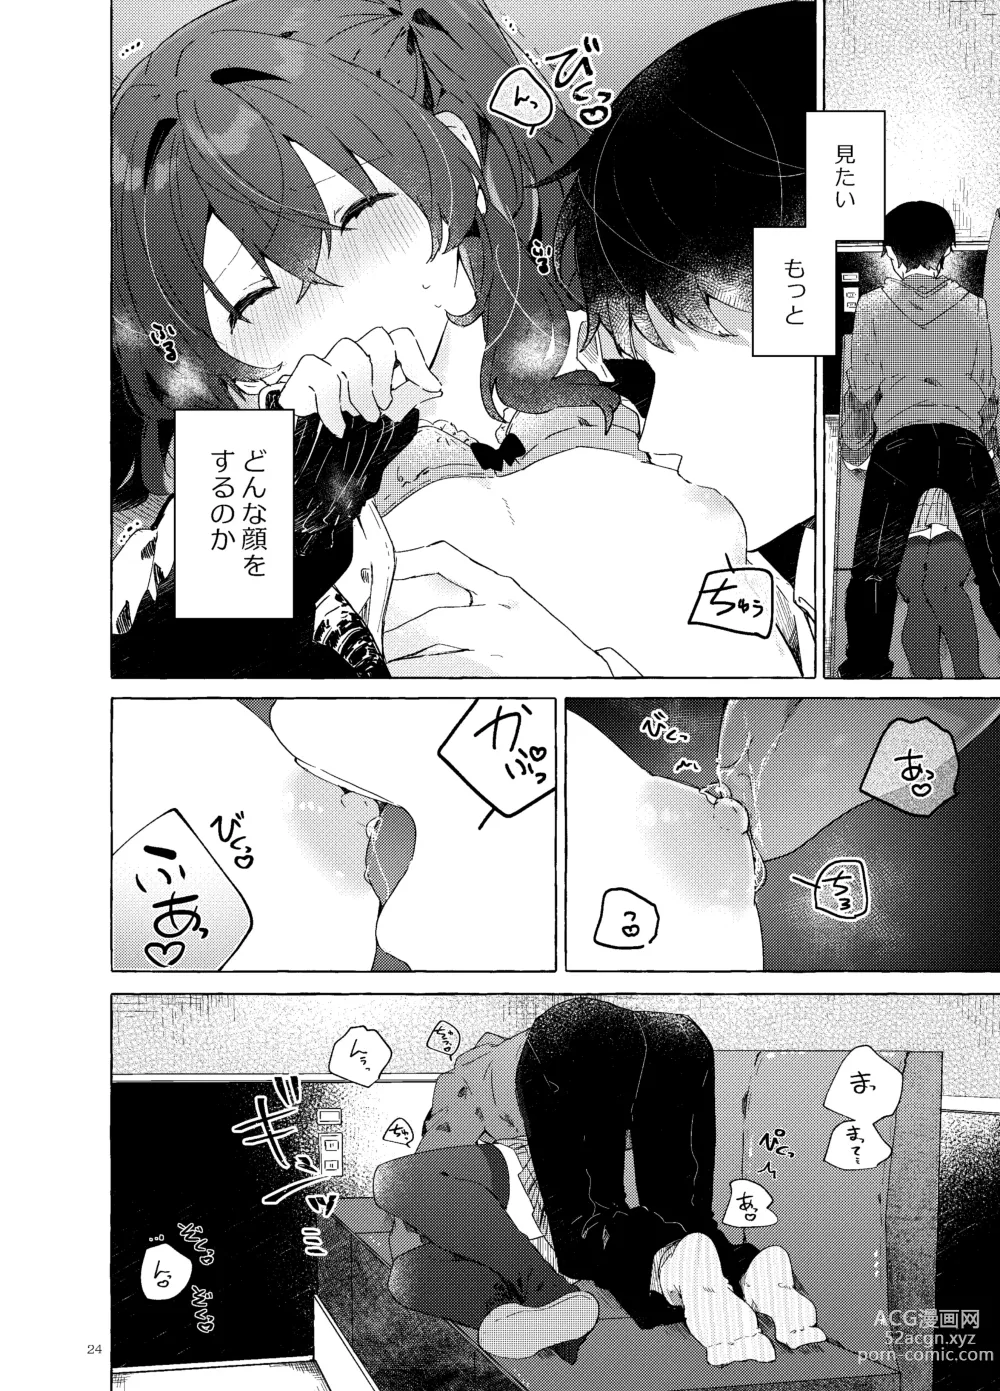 Page 25 of doujinshi Koi to Mahou to Etcetera - Love, Magic, and etc.